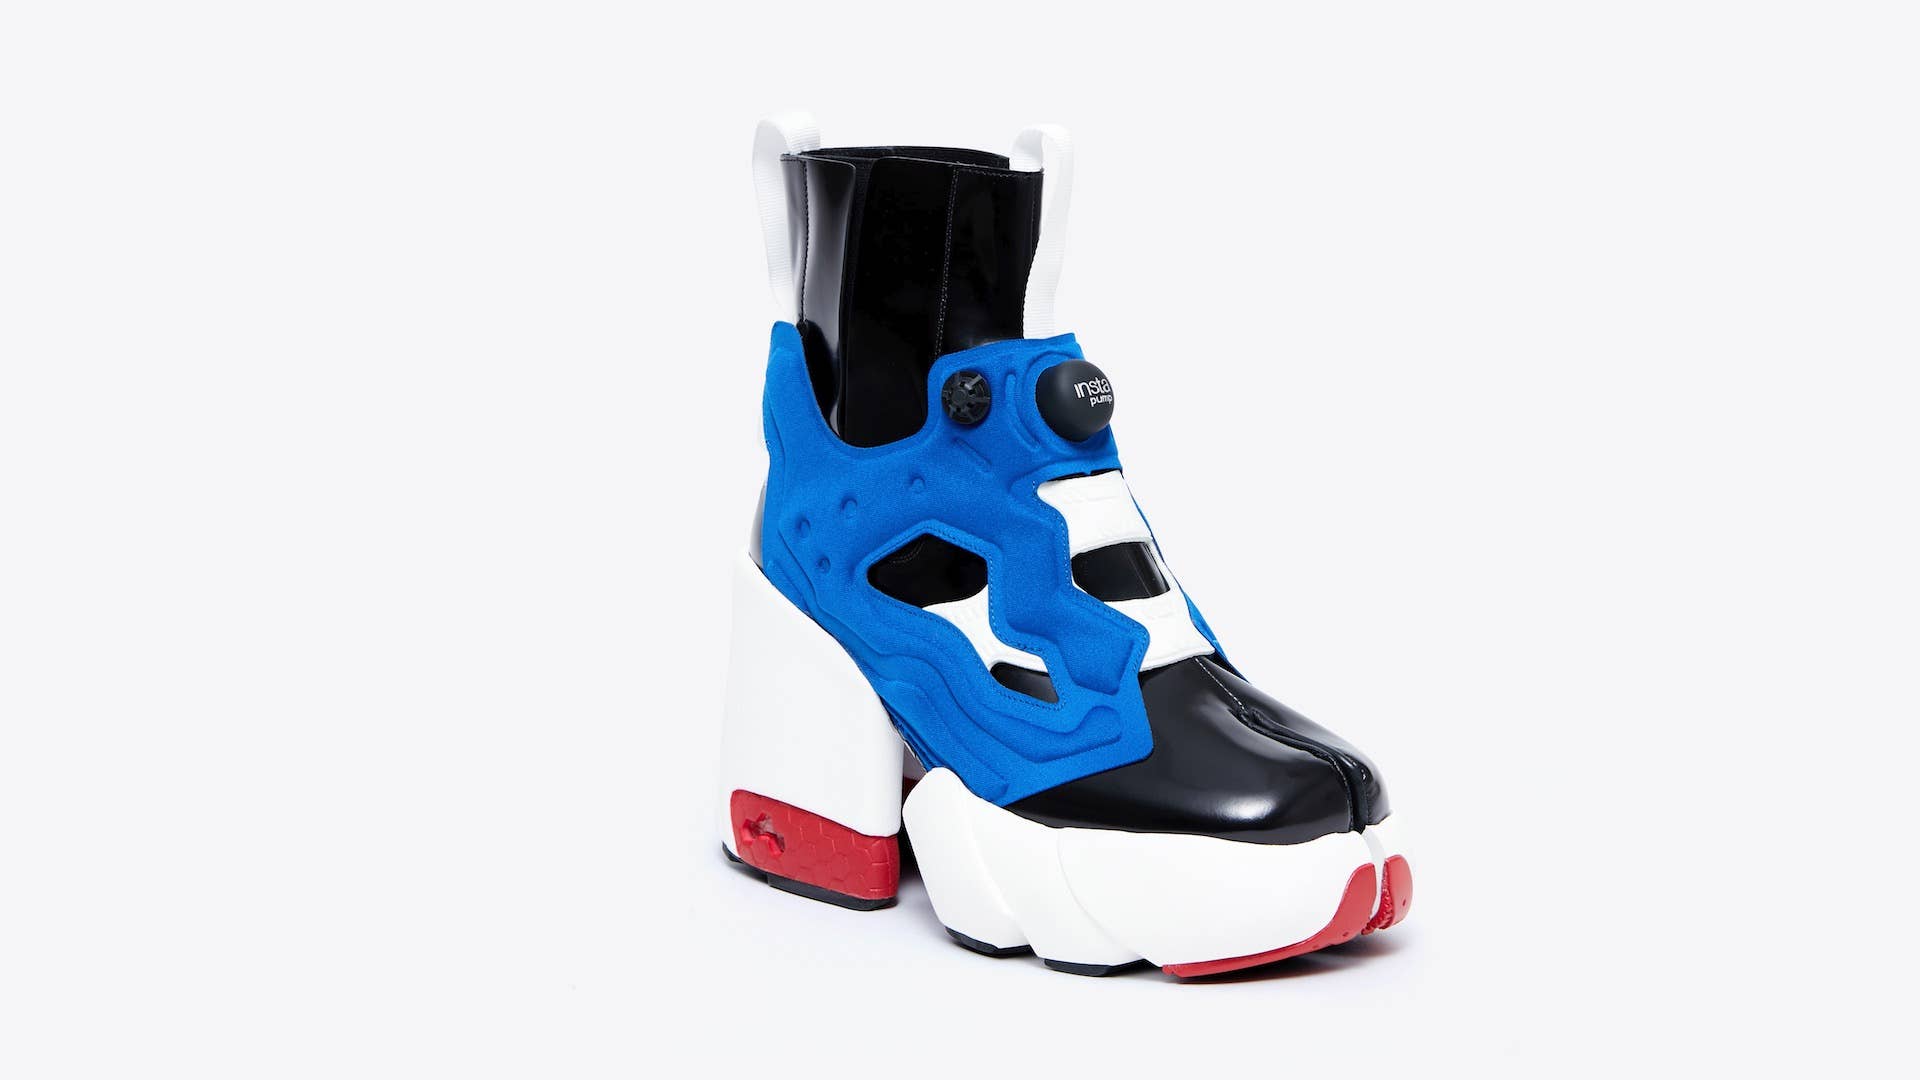 Maison Margiela and Reebok design split-toe sneakers for the digital age